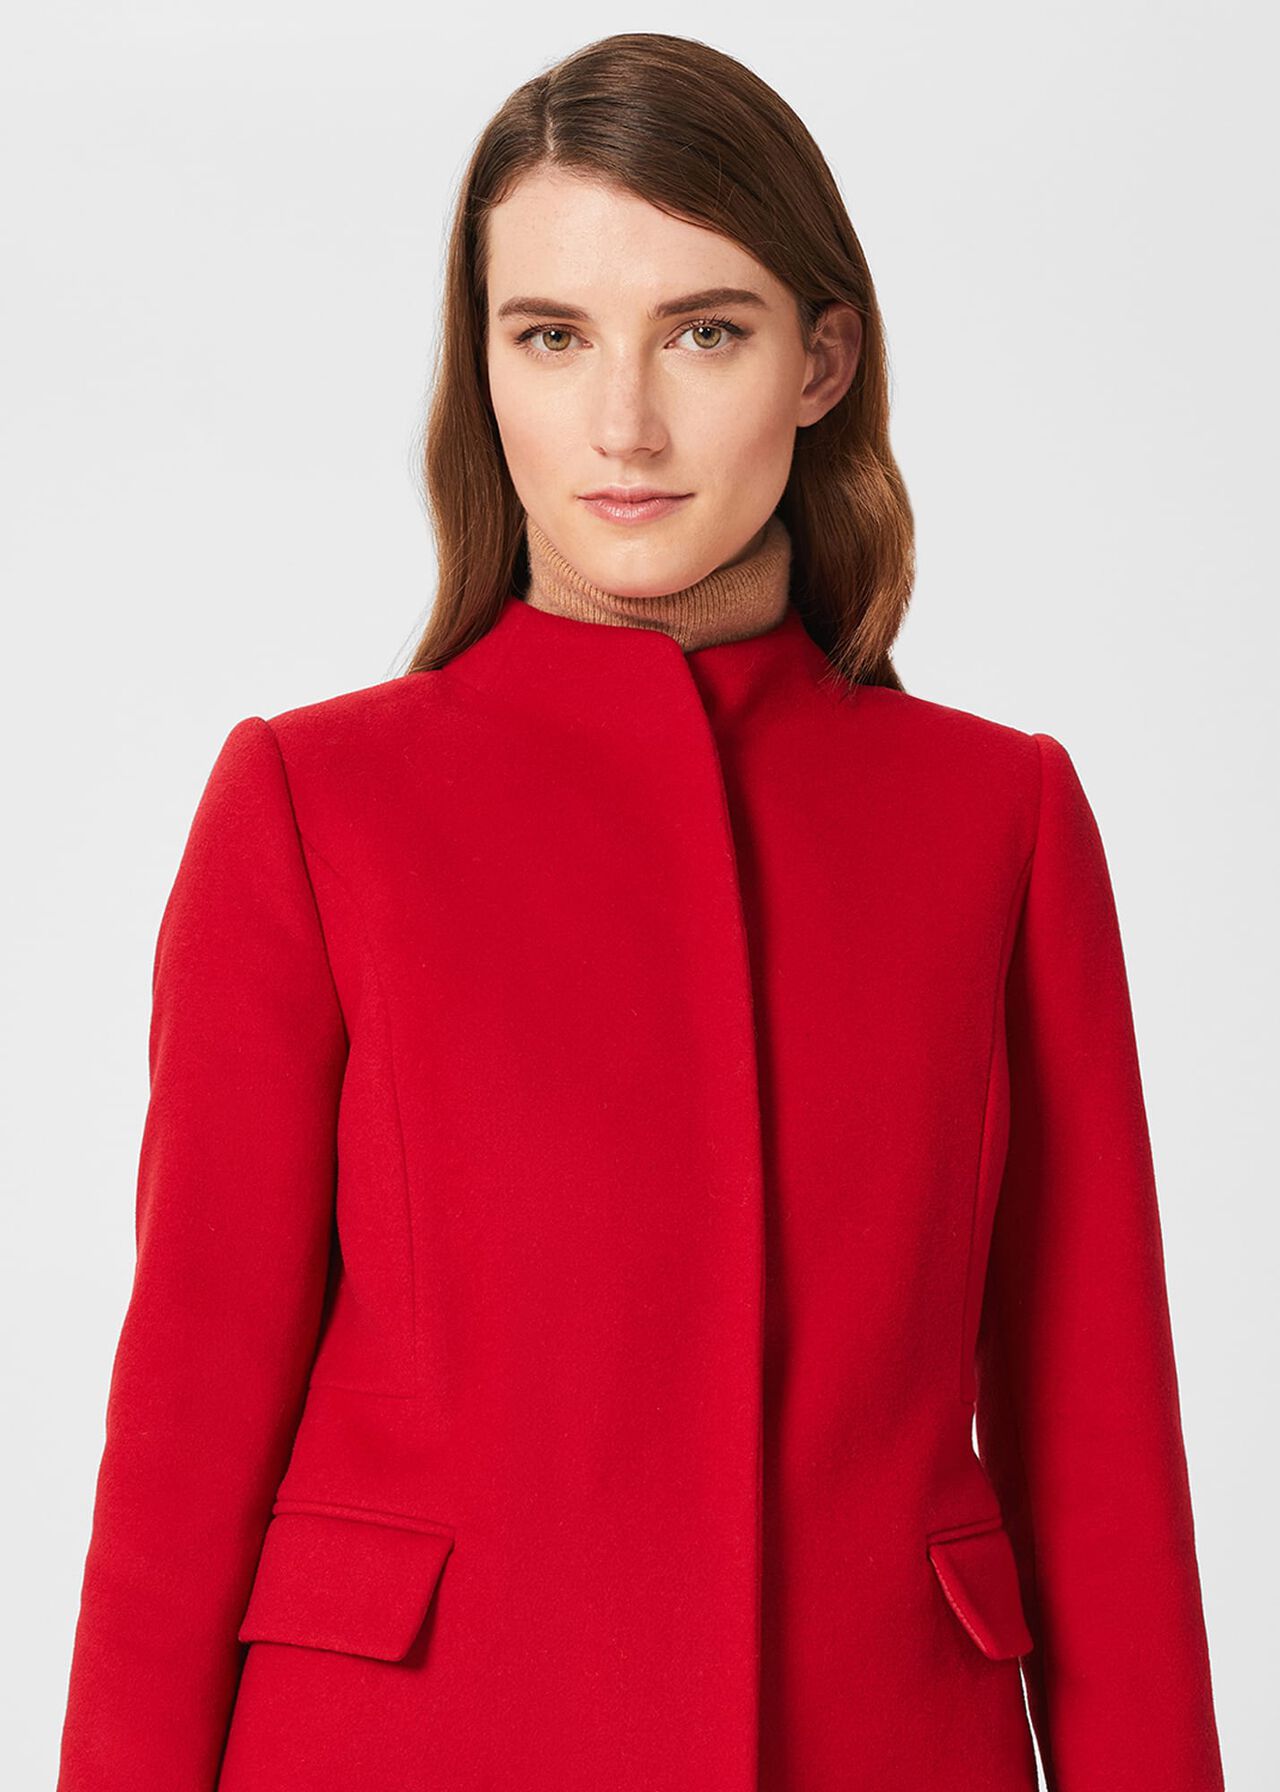 Rhiannon Wool Blend Coat, Red, hi-res